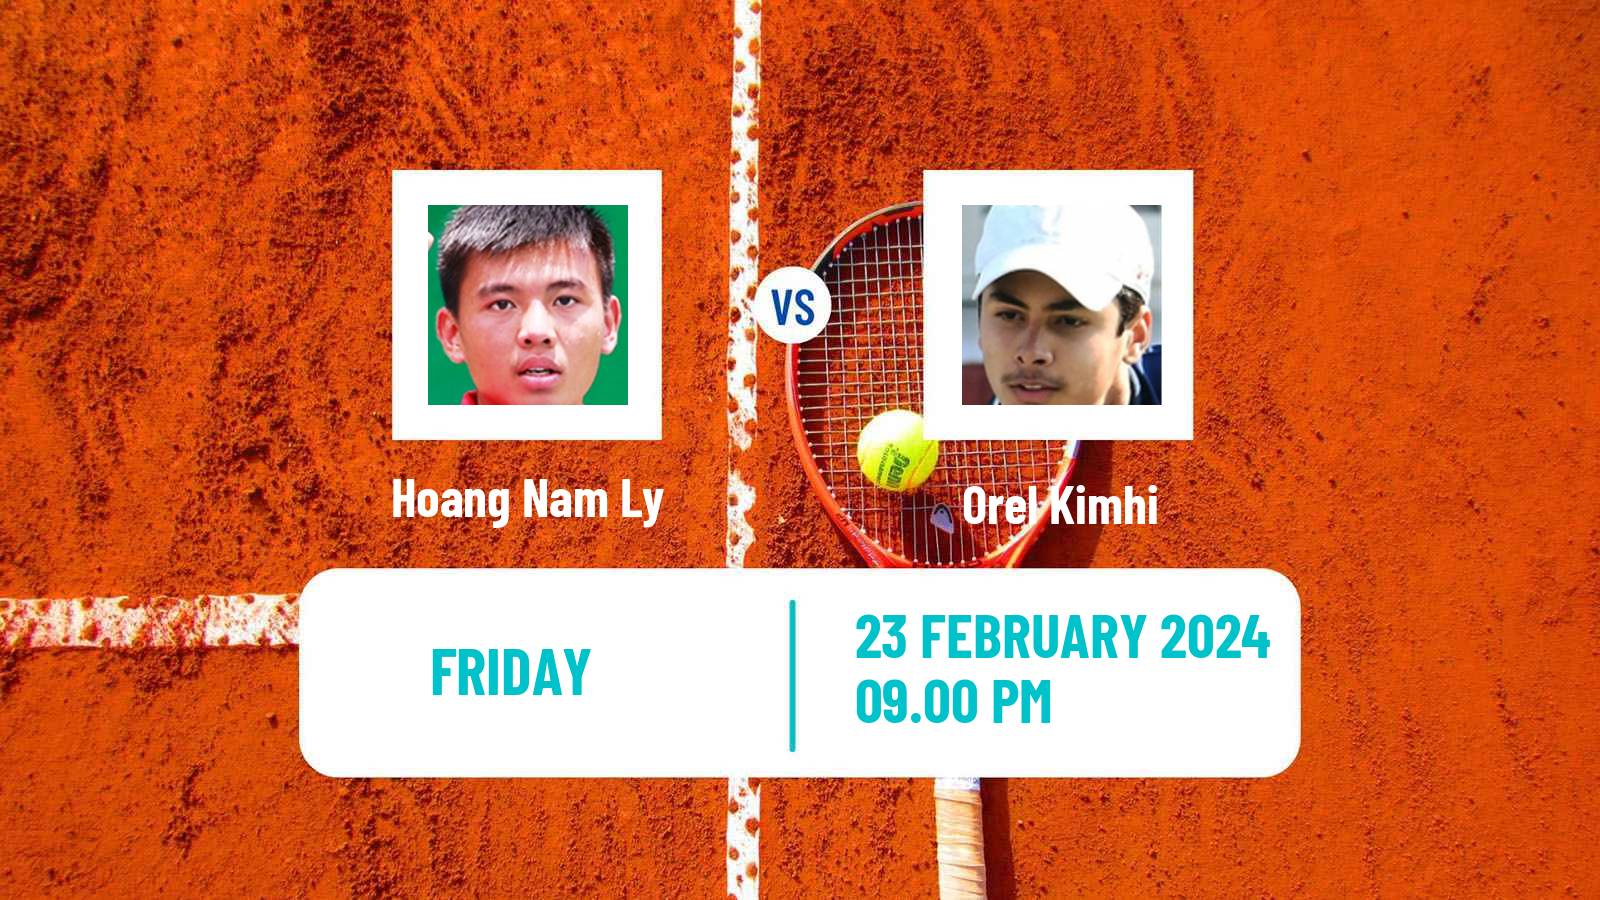 Tennis ITF M15 Nakhon Si Thammarat 2 Men Hoang Nam Ly - Orel Kimhi